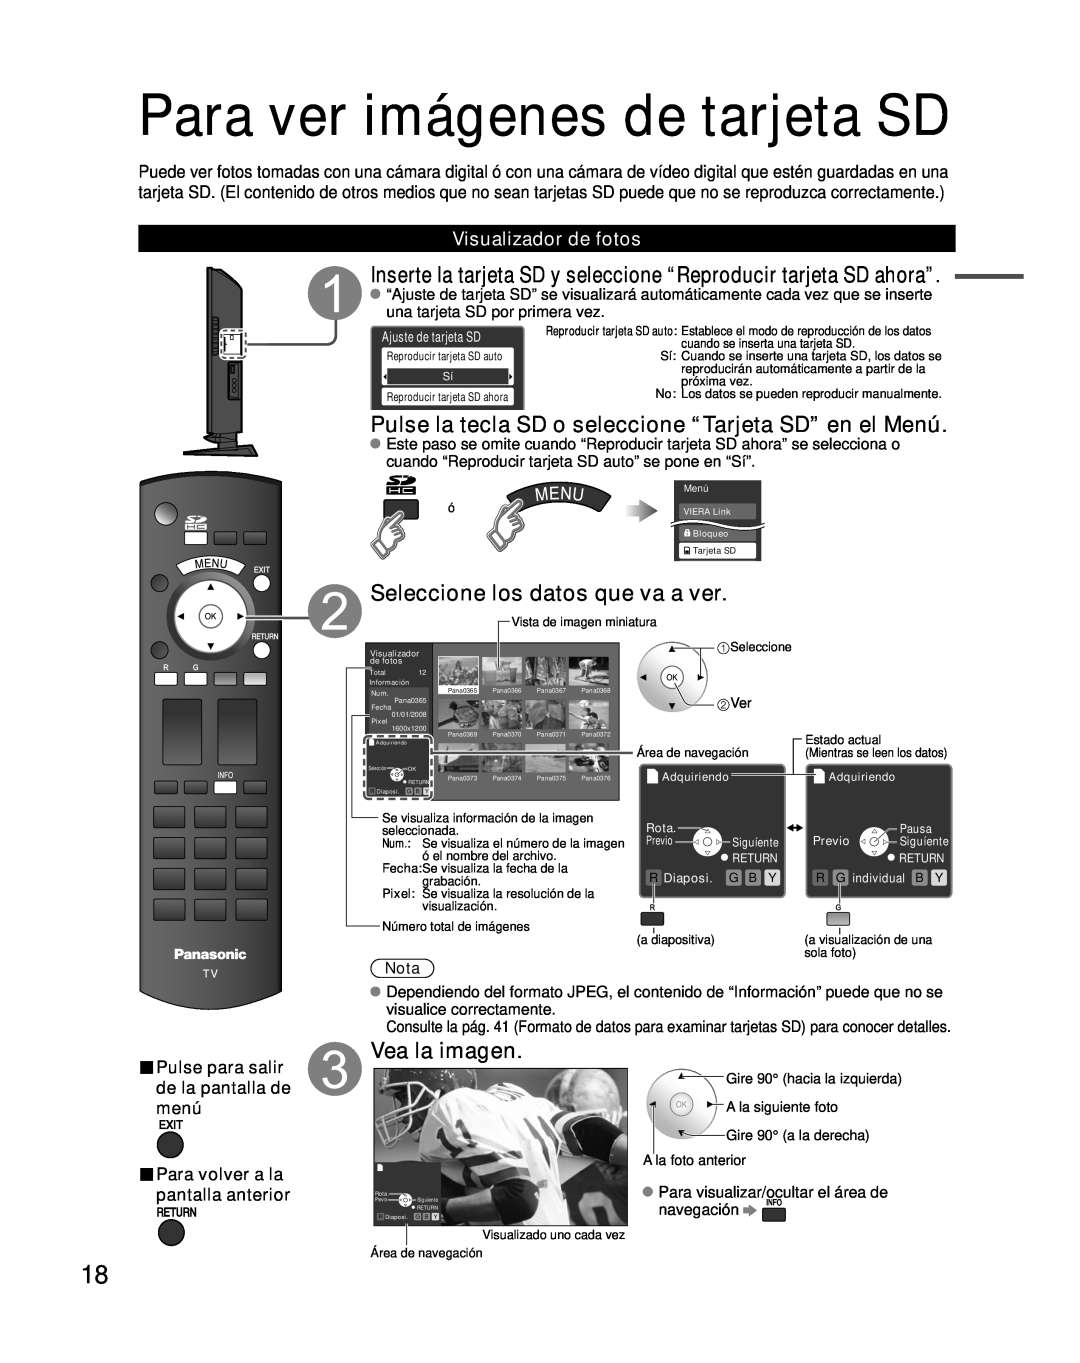 Panasonic TC-26LX85 Para ver imágenes de tarjeta SD, Pulse la tecla SD o seleccione “Tarjeta SD” en el Menú, Vea la imagen 